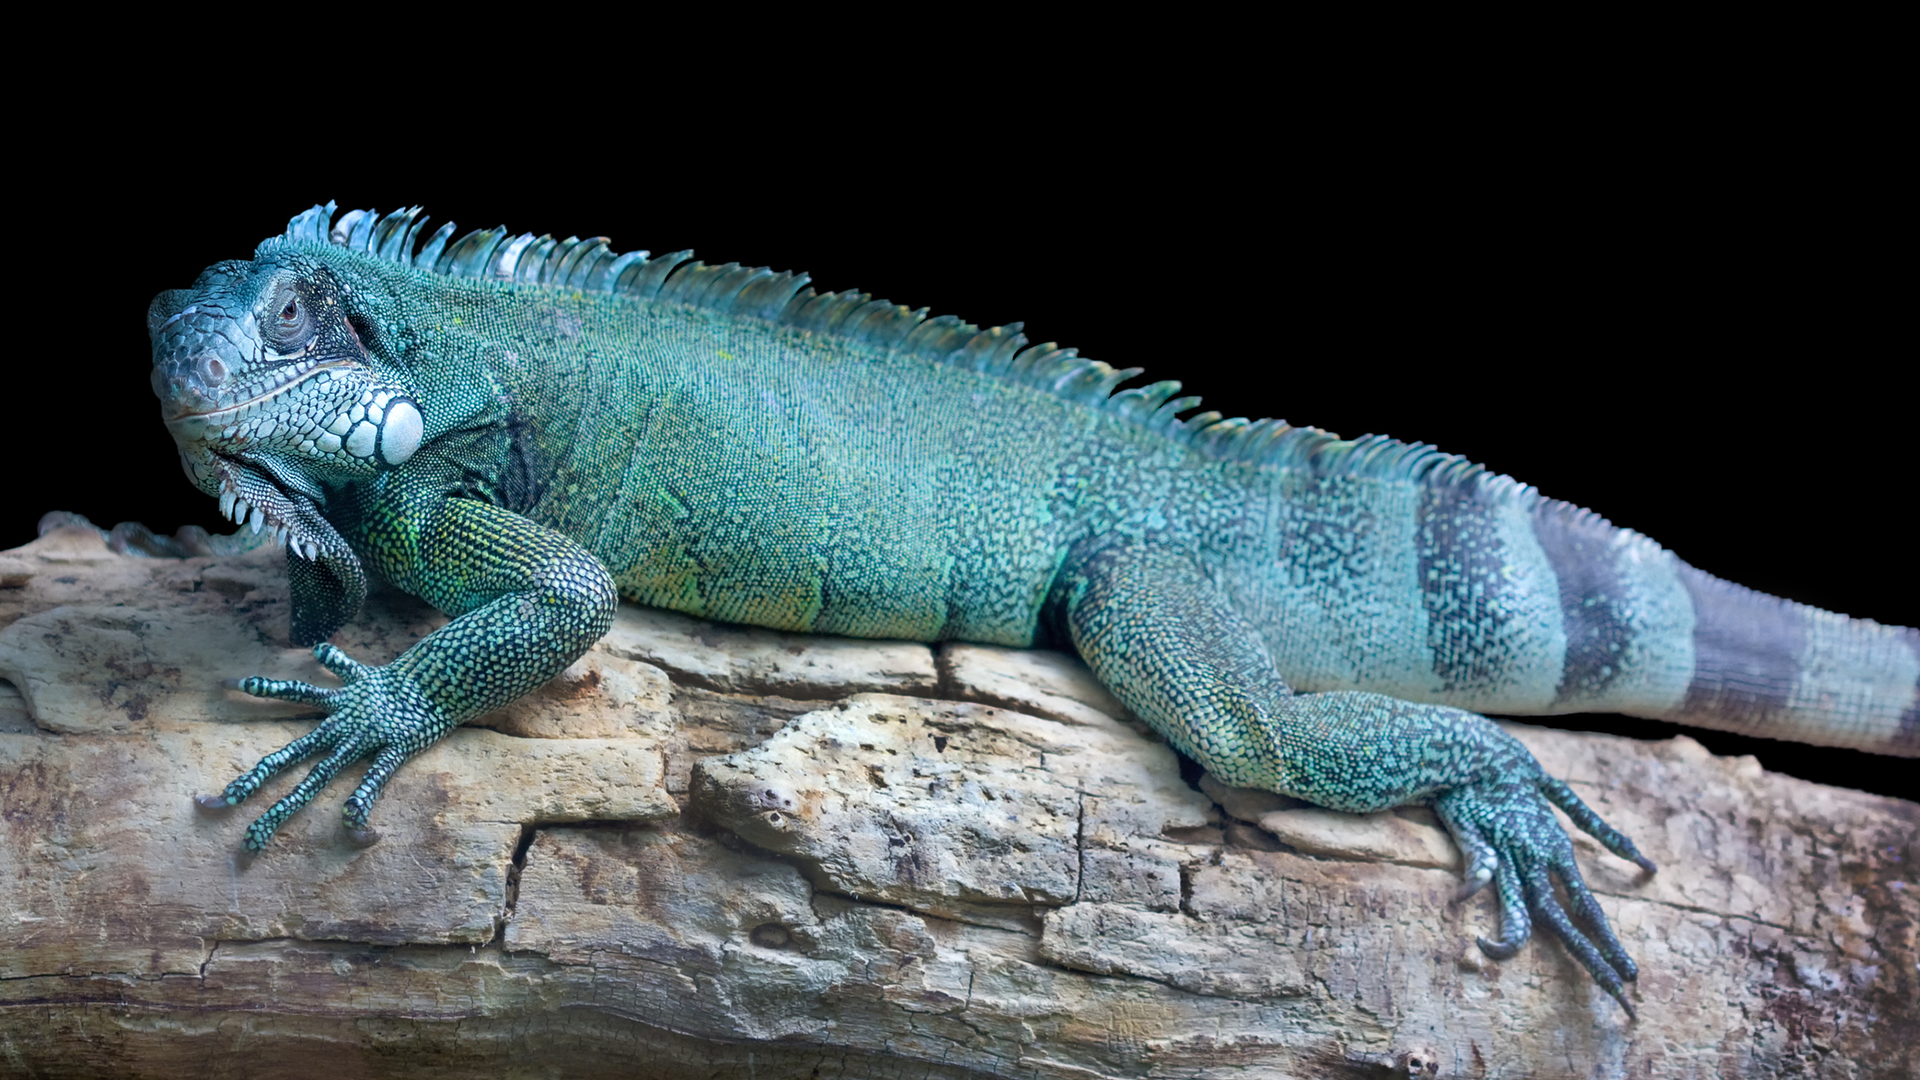 Blue iguana bathing in the sun